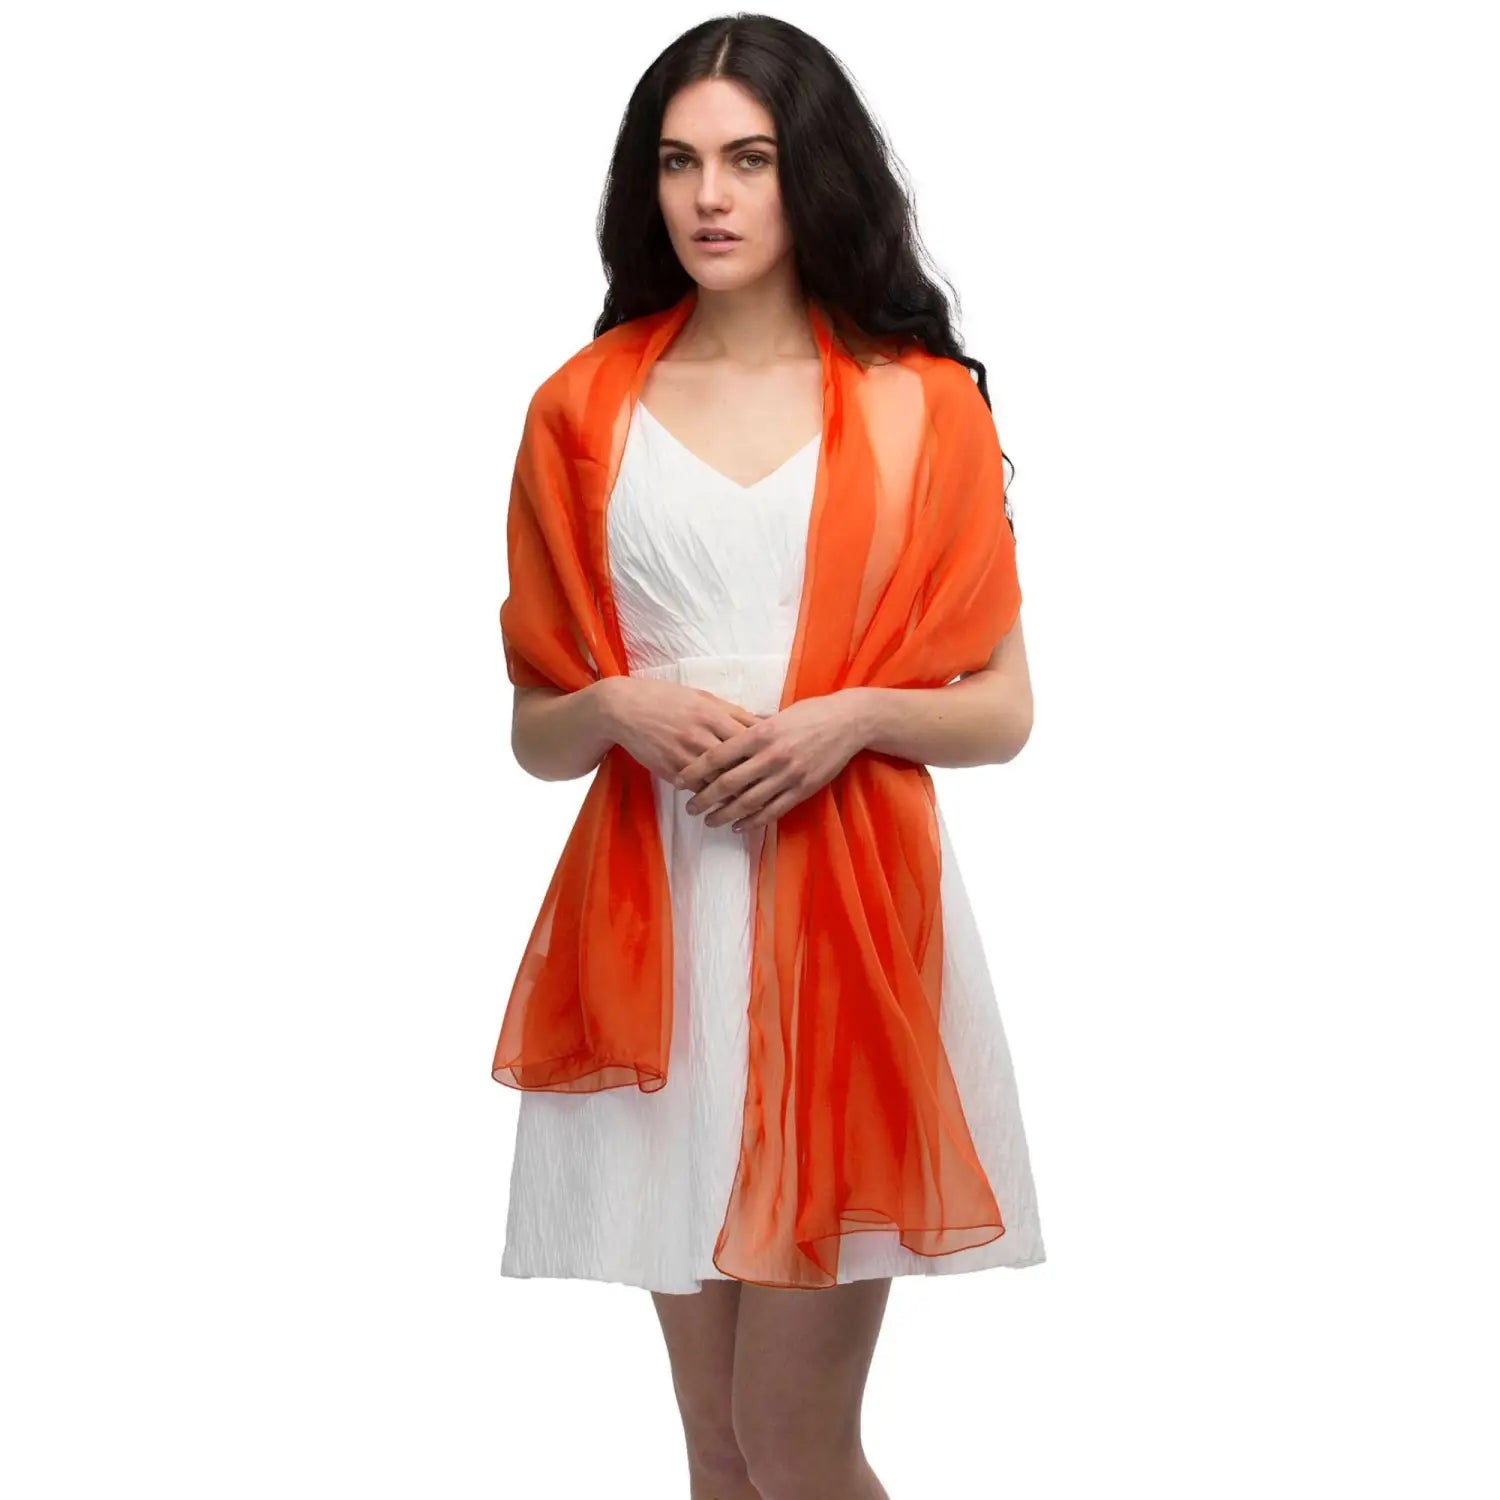 Beautiful woman wearing an orange chiffon shawl from Plain Chiffon Shawl Semi-Opaque - Versatile Scarf collection.